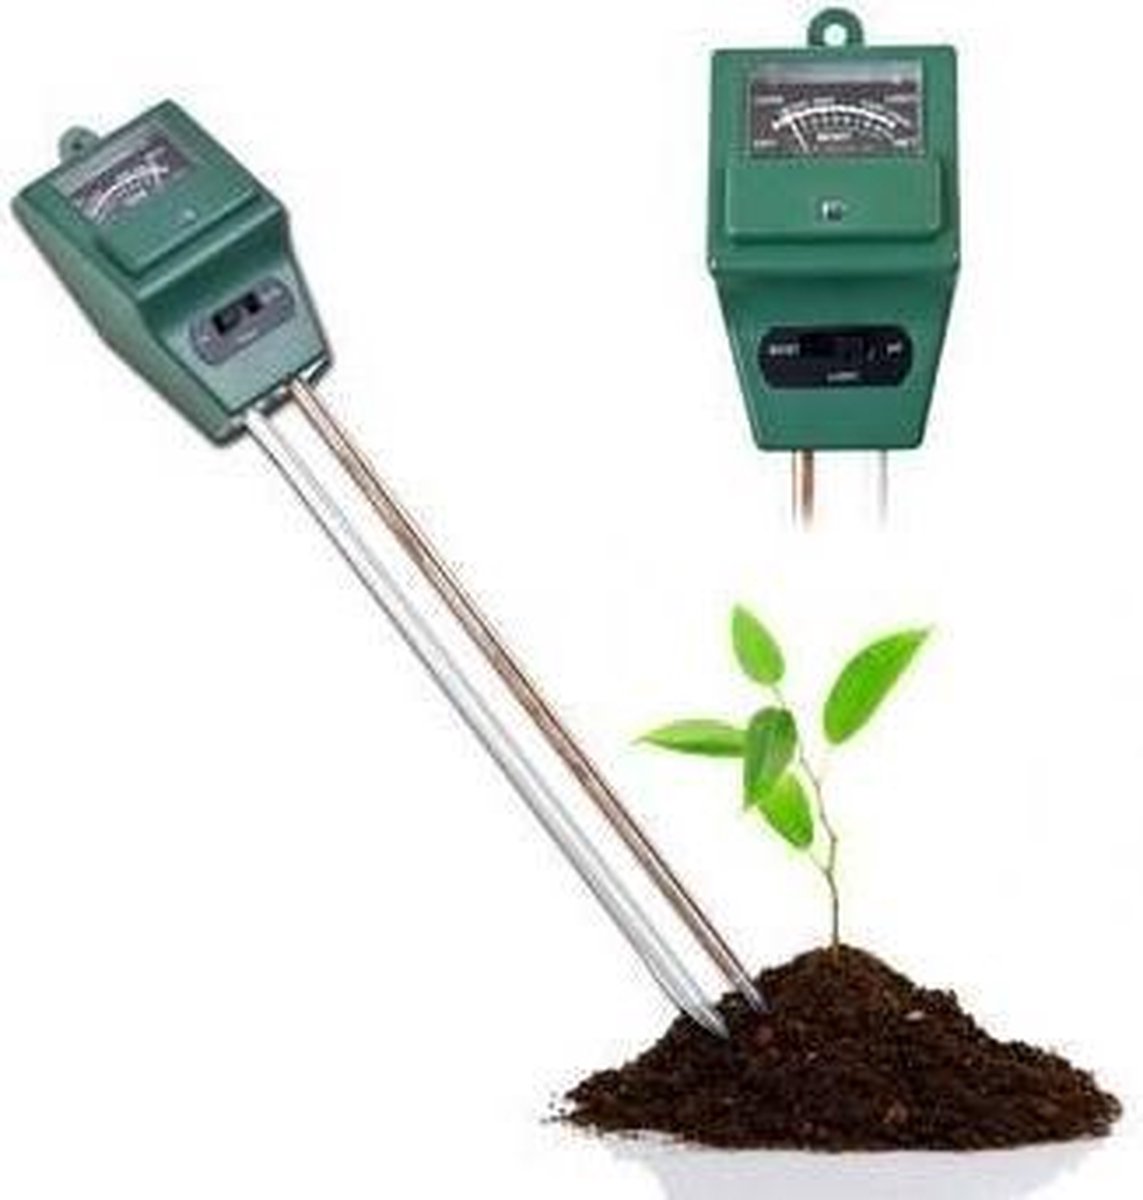 Plant Vochtmeter 3-in-1 - PH Meter Grond - Zuurtegraad Meter - PH Tester Planten Bodemtester - Grondmeter - Vochtigheidsmeter Planten